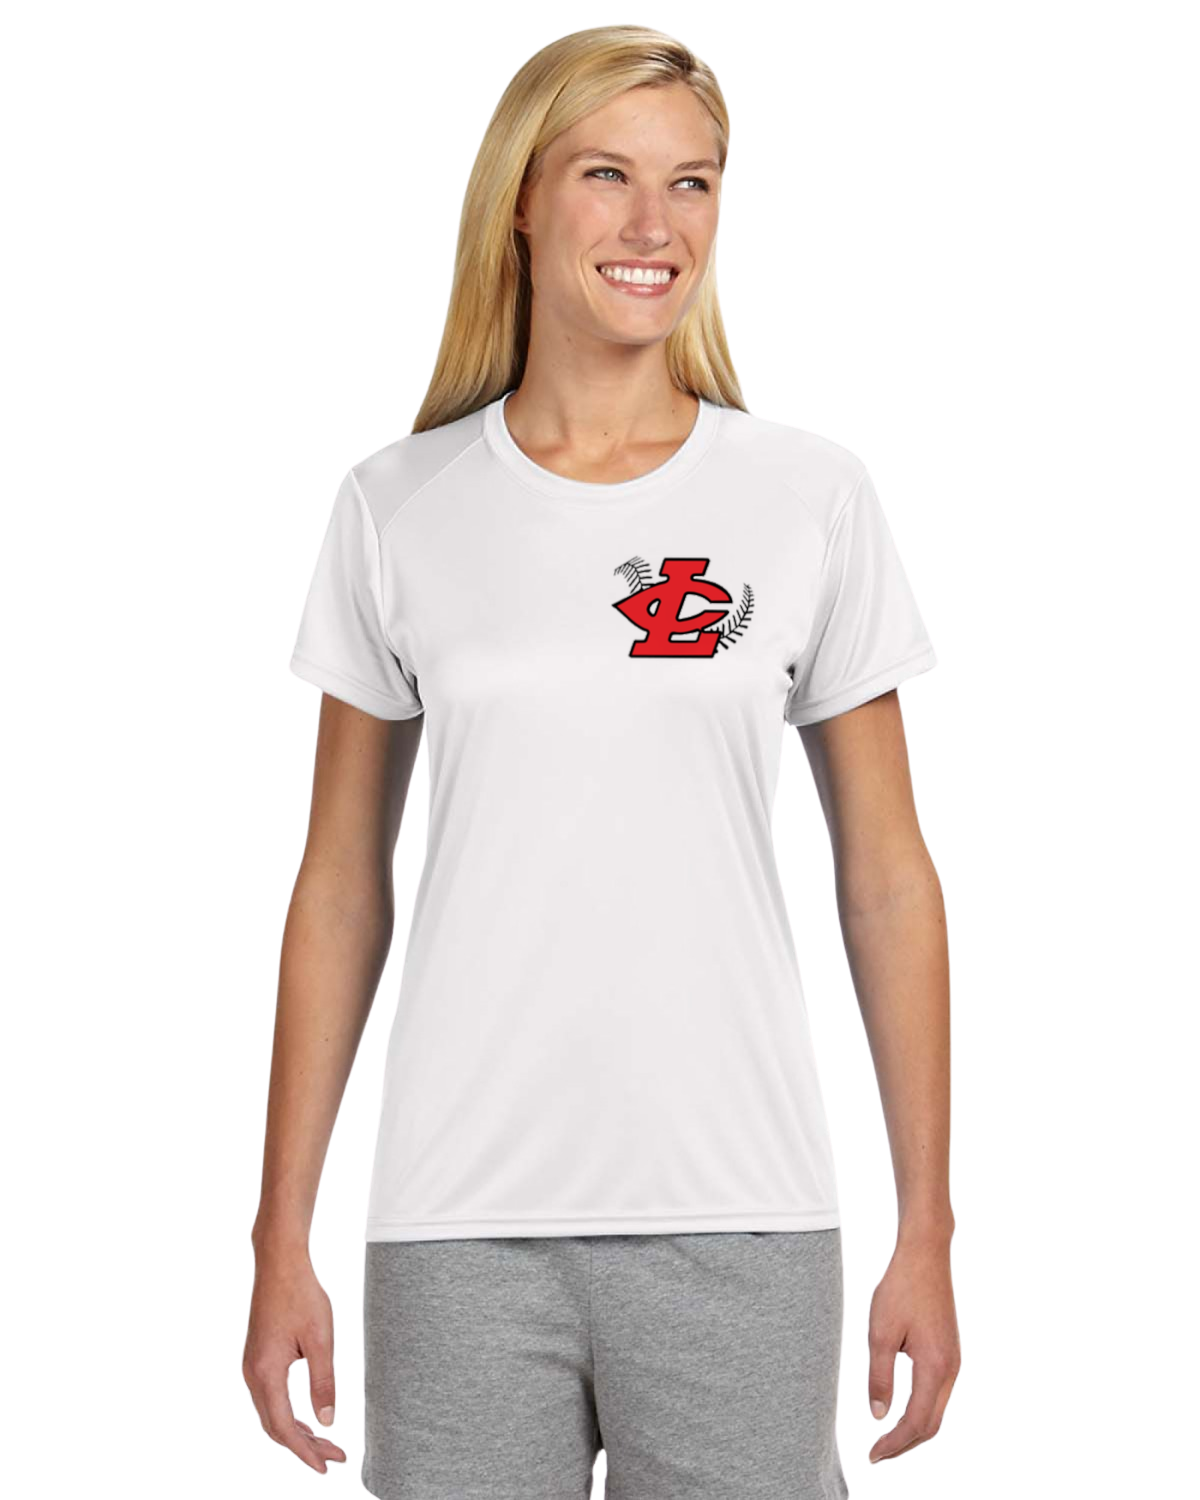 CLLL A4 Womens Cut Cooling Performance Short Sleeve T-Shirt WHITE